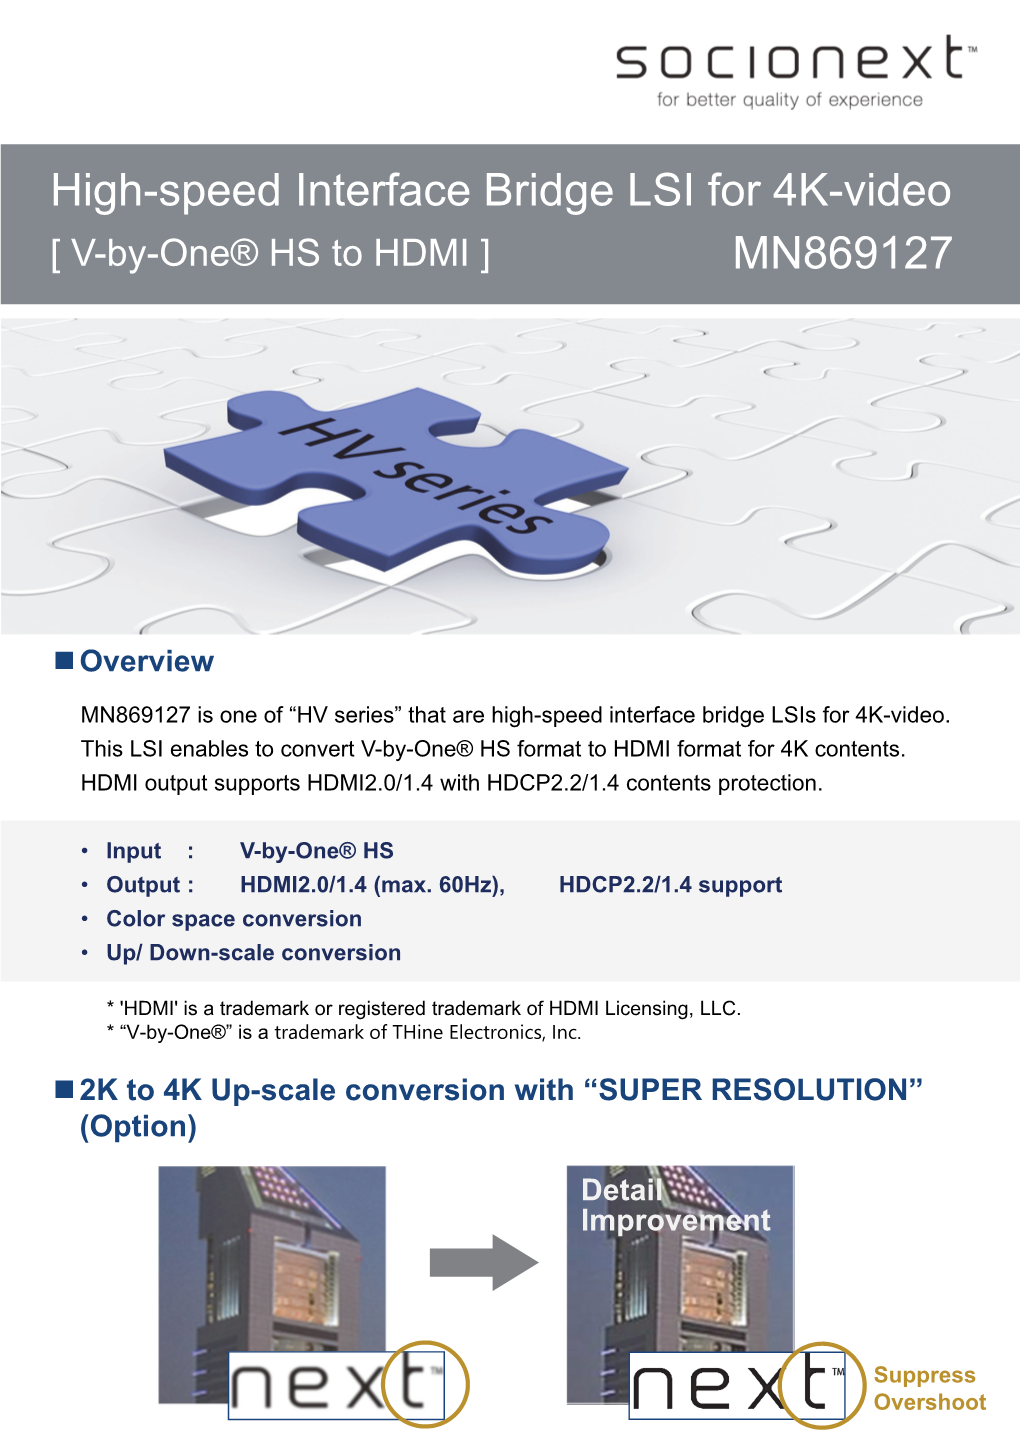 High-Speed Interface Bridge LSI for 4K-Video MN869127